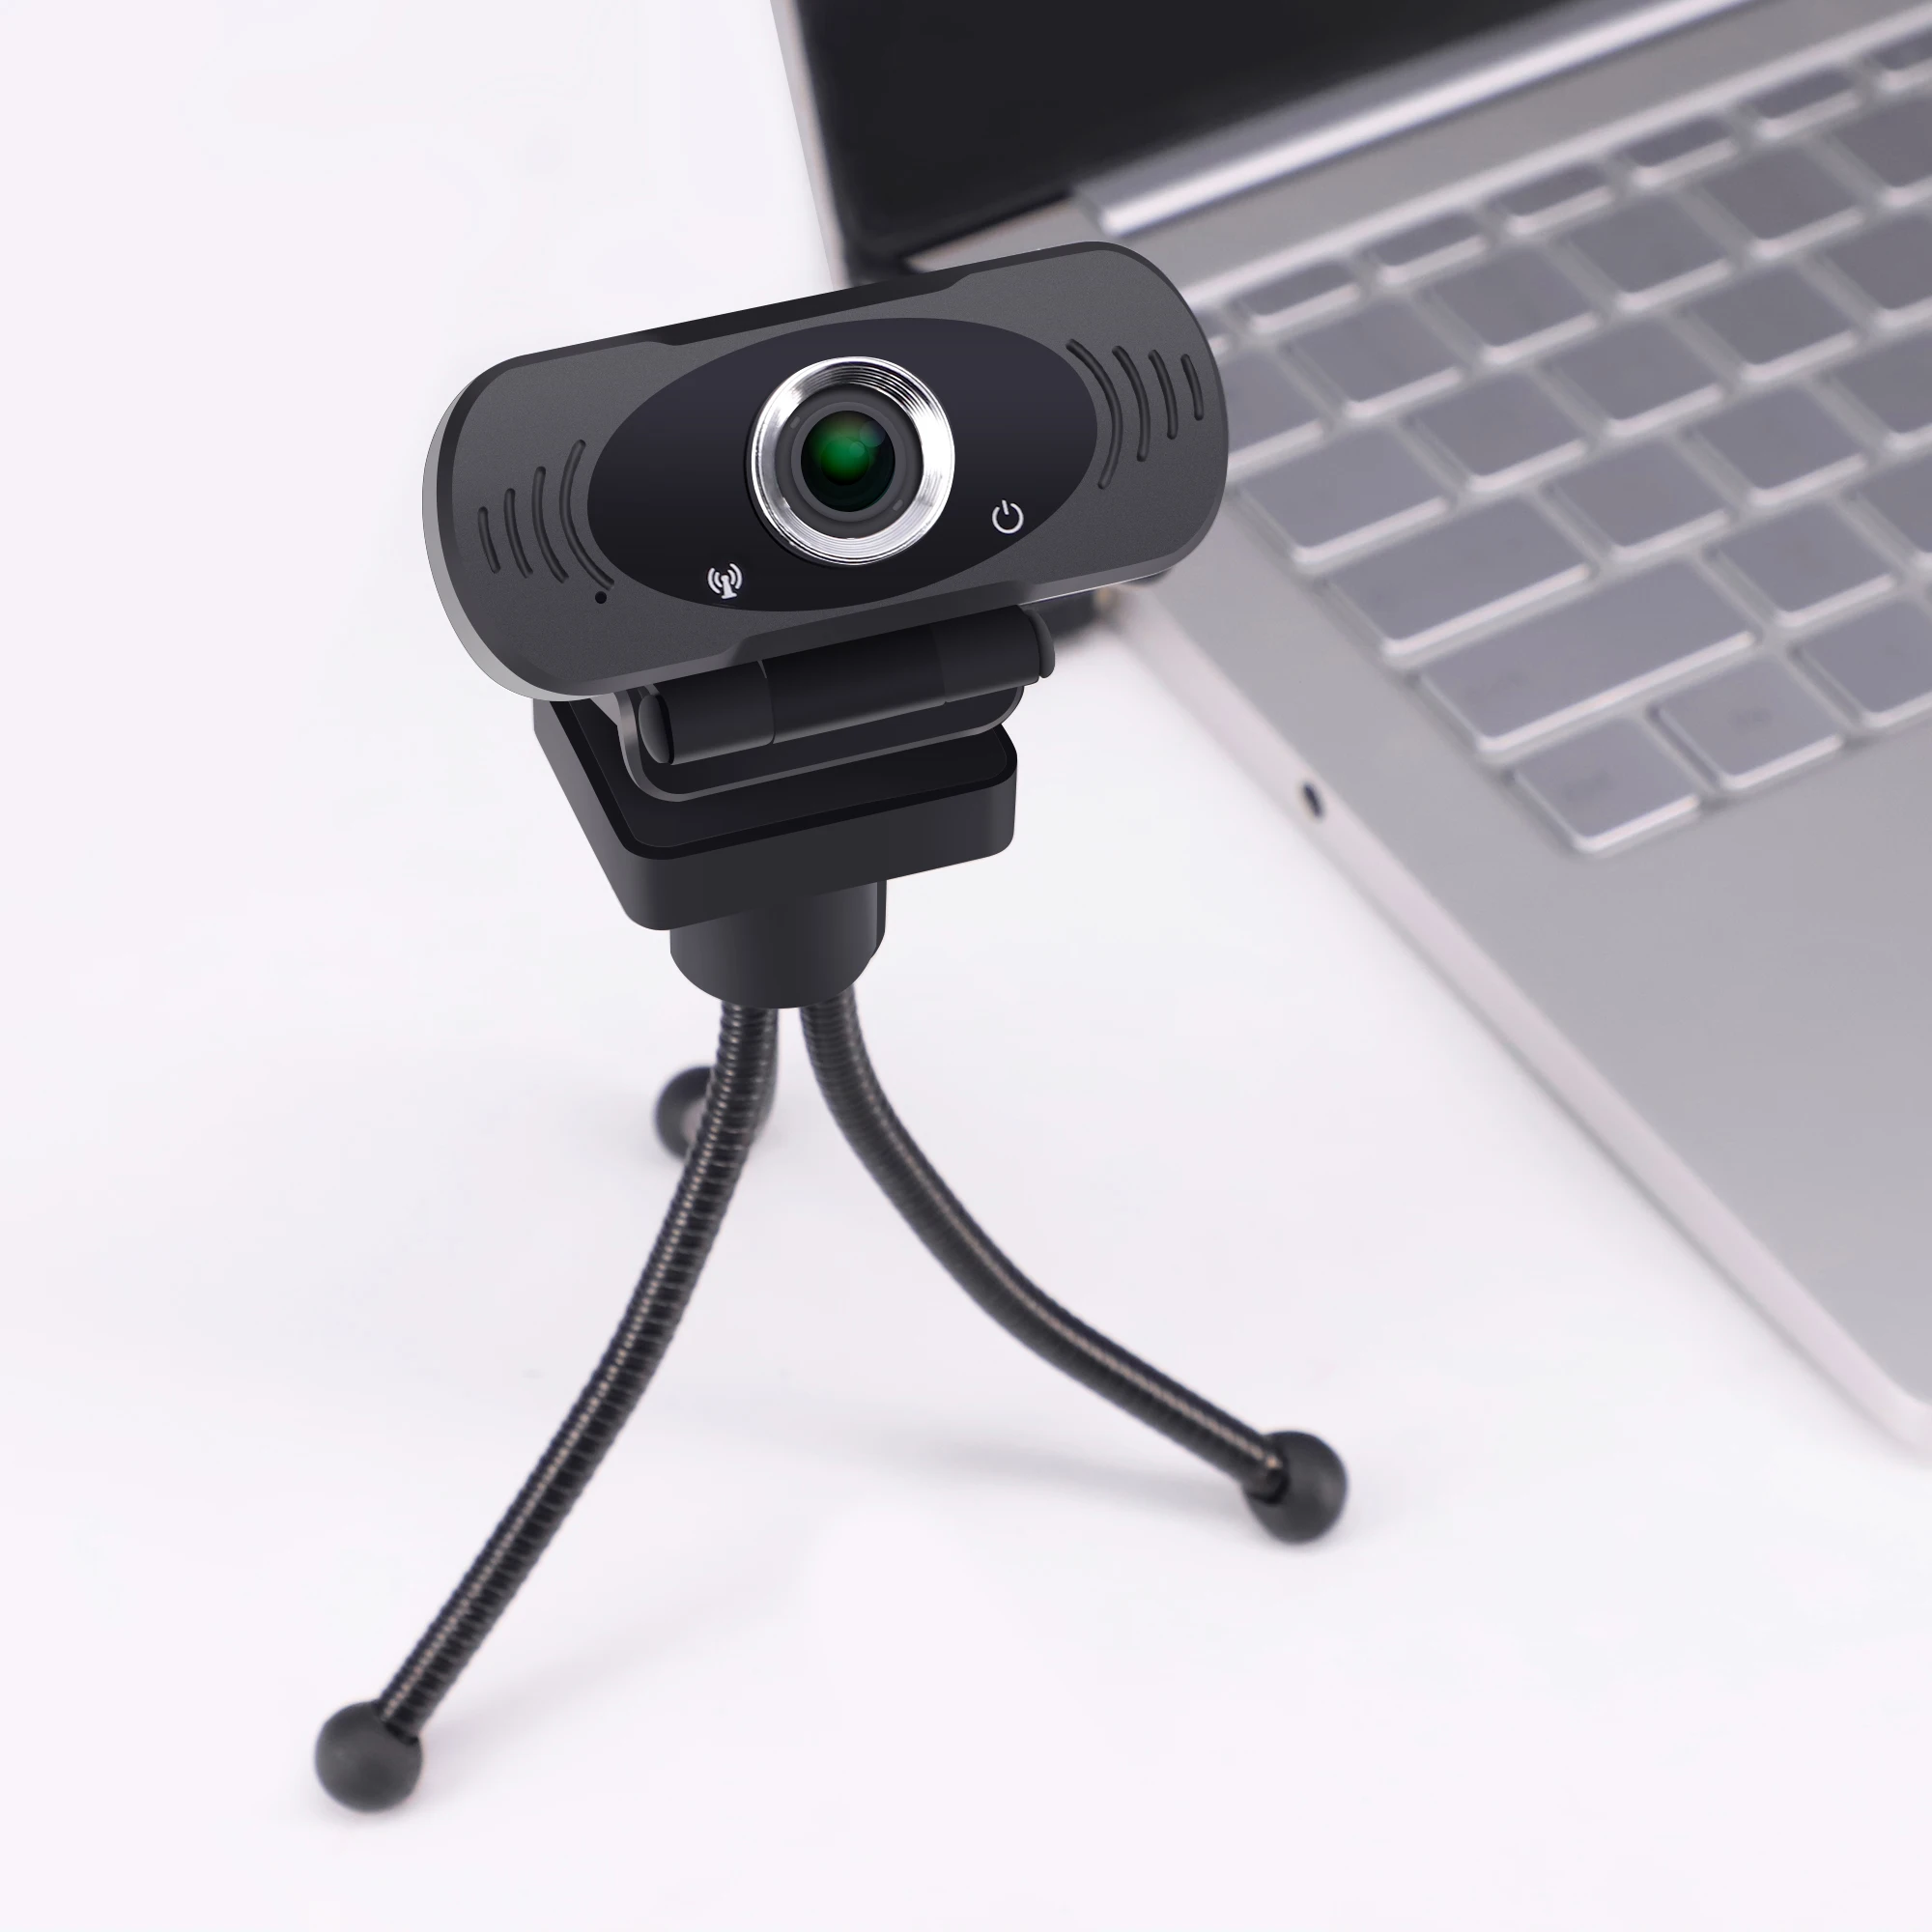 Hot Sell Full HD webcam Stream PC Laptop Computer USB 2.0 Web cam 1080P